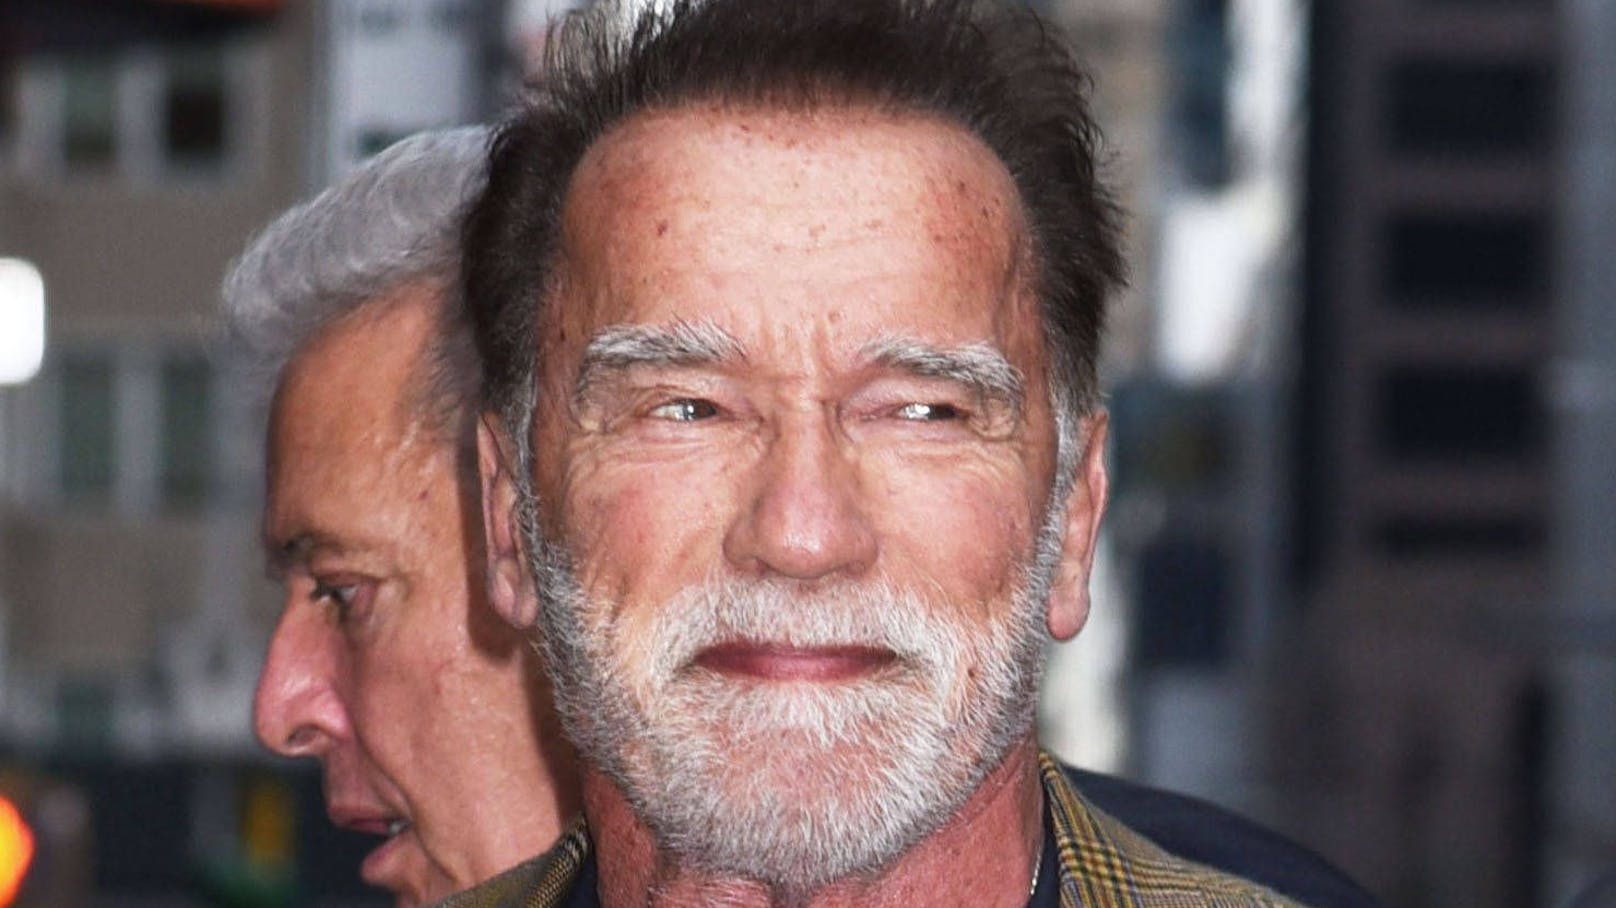 Heftige Kritik an Zoll nach Schwarzenegger-Kontrolle